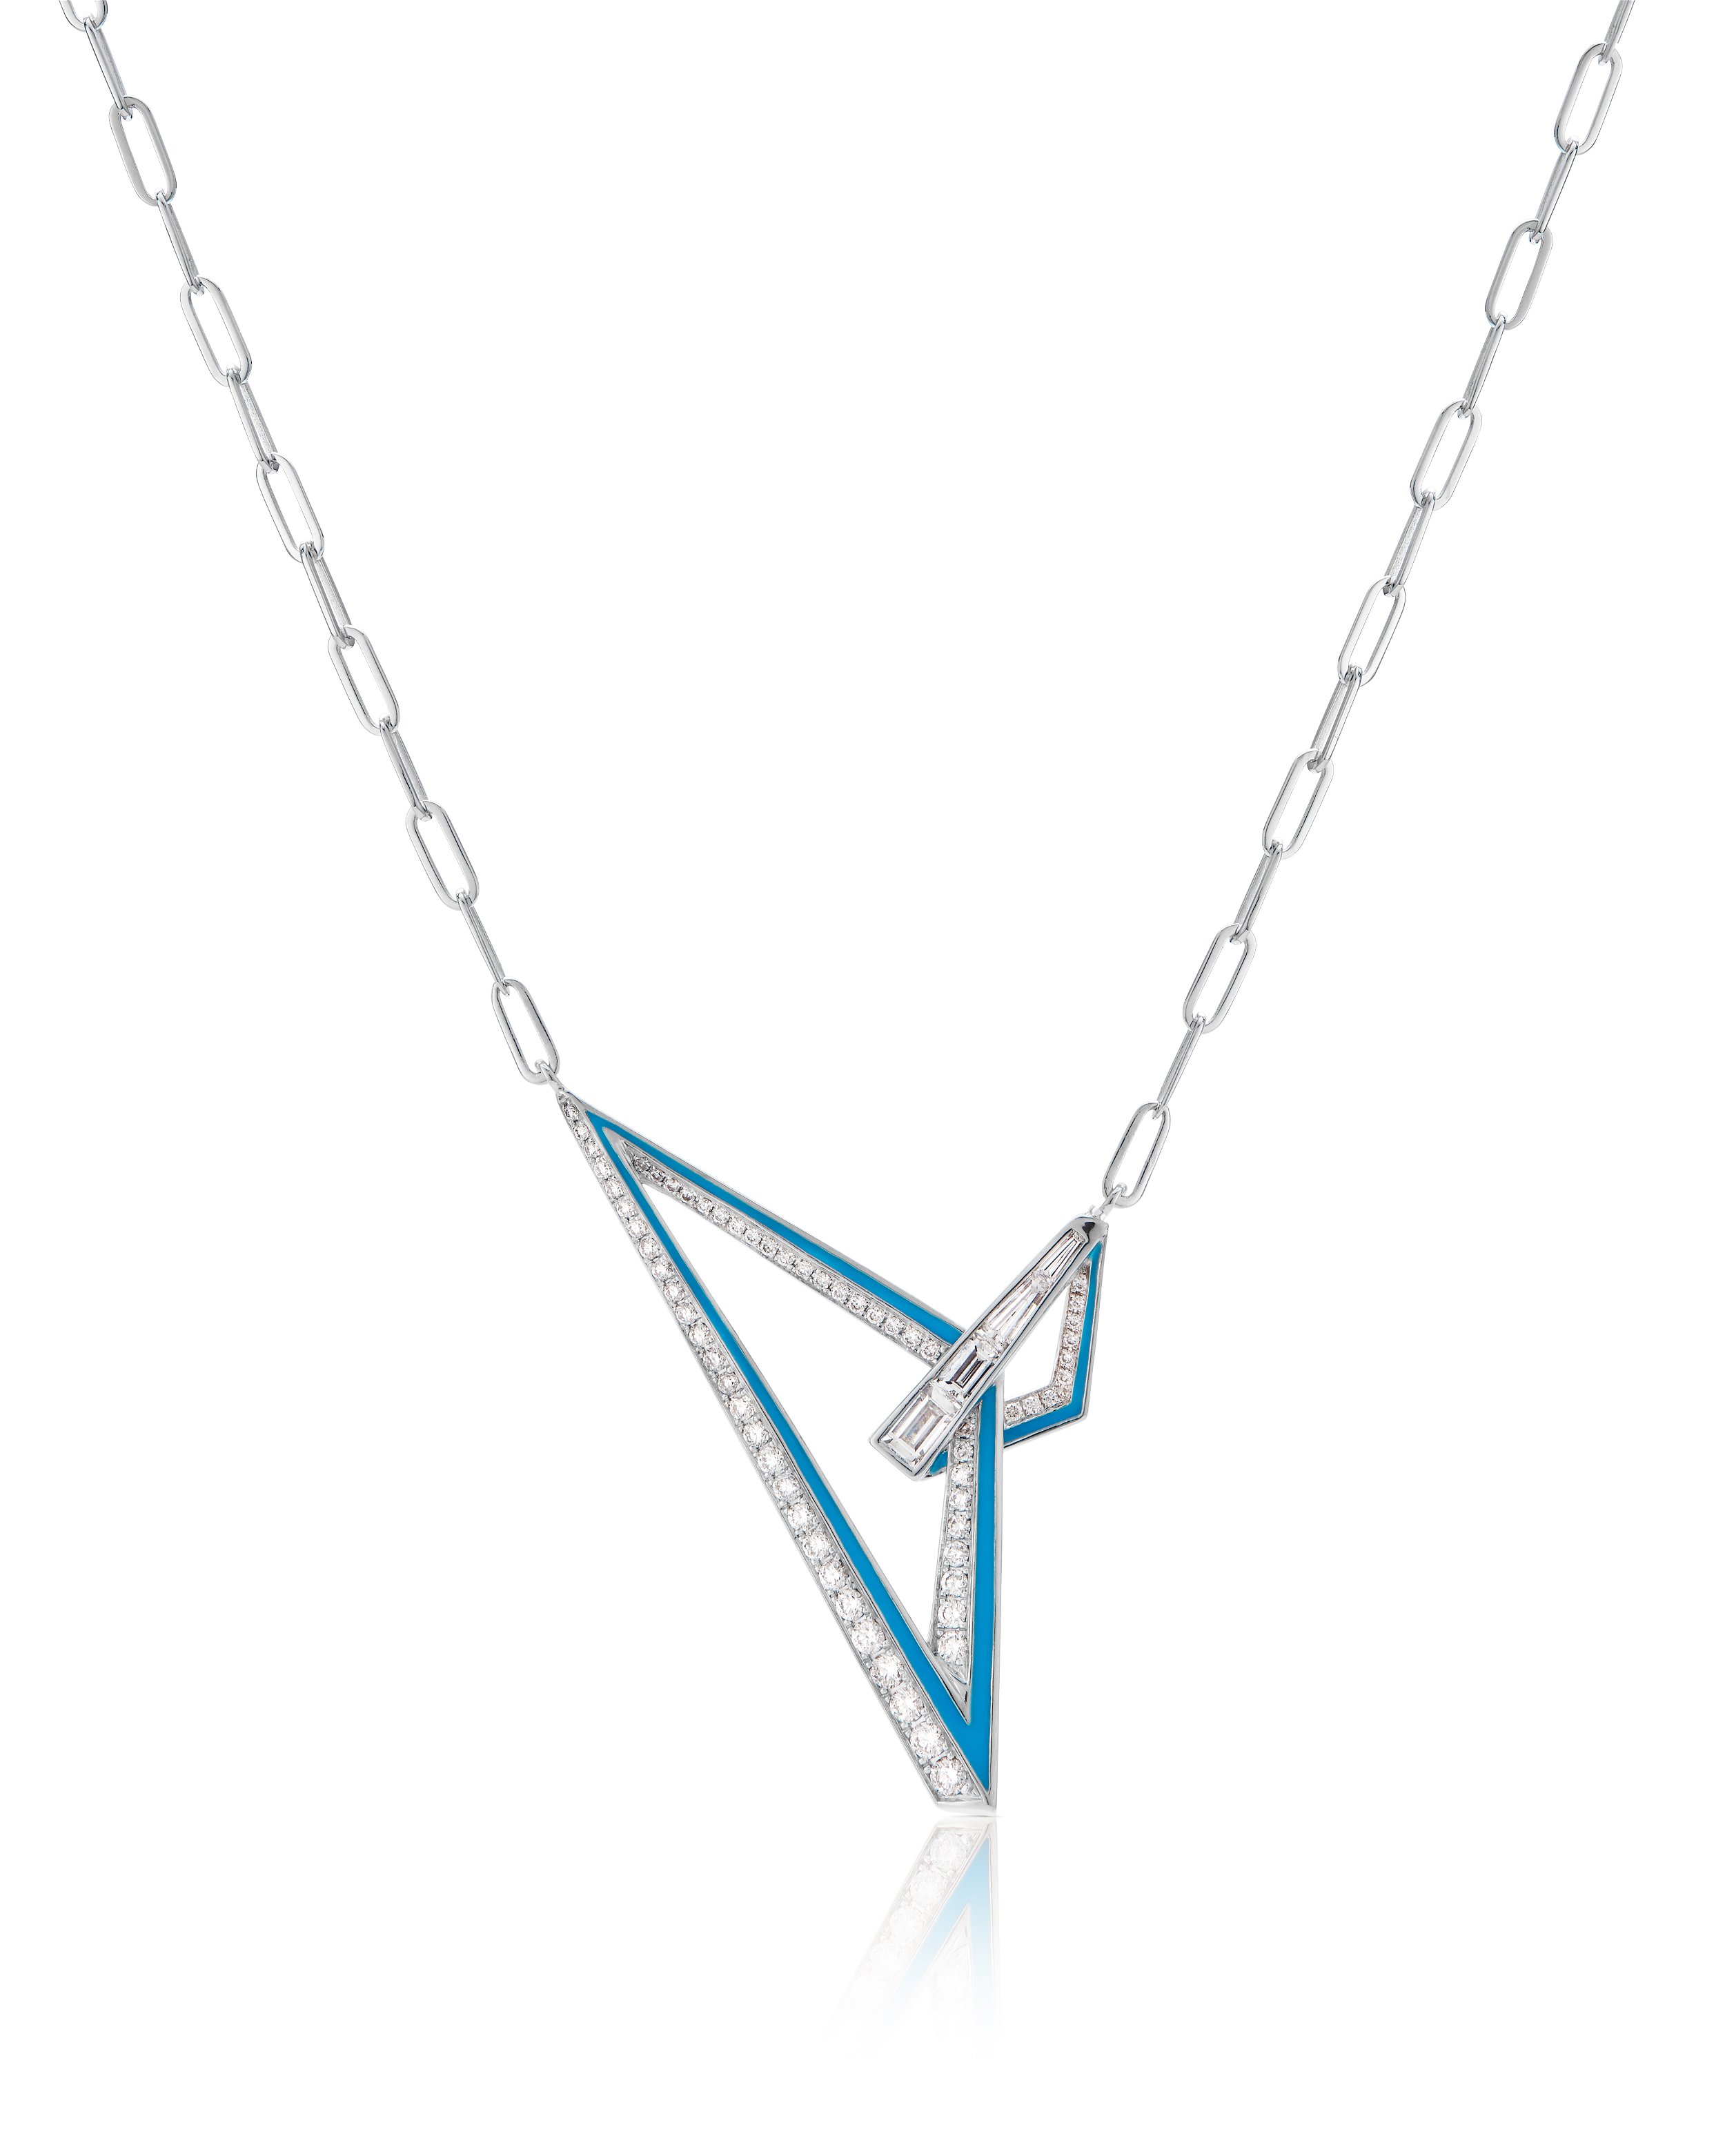 Vertigo Obtuse Necklace with White Diamonds and Light Blue Enamel in 18kt White Gold